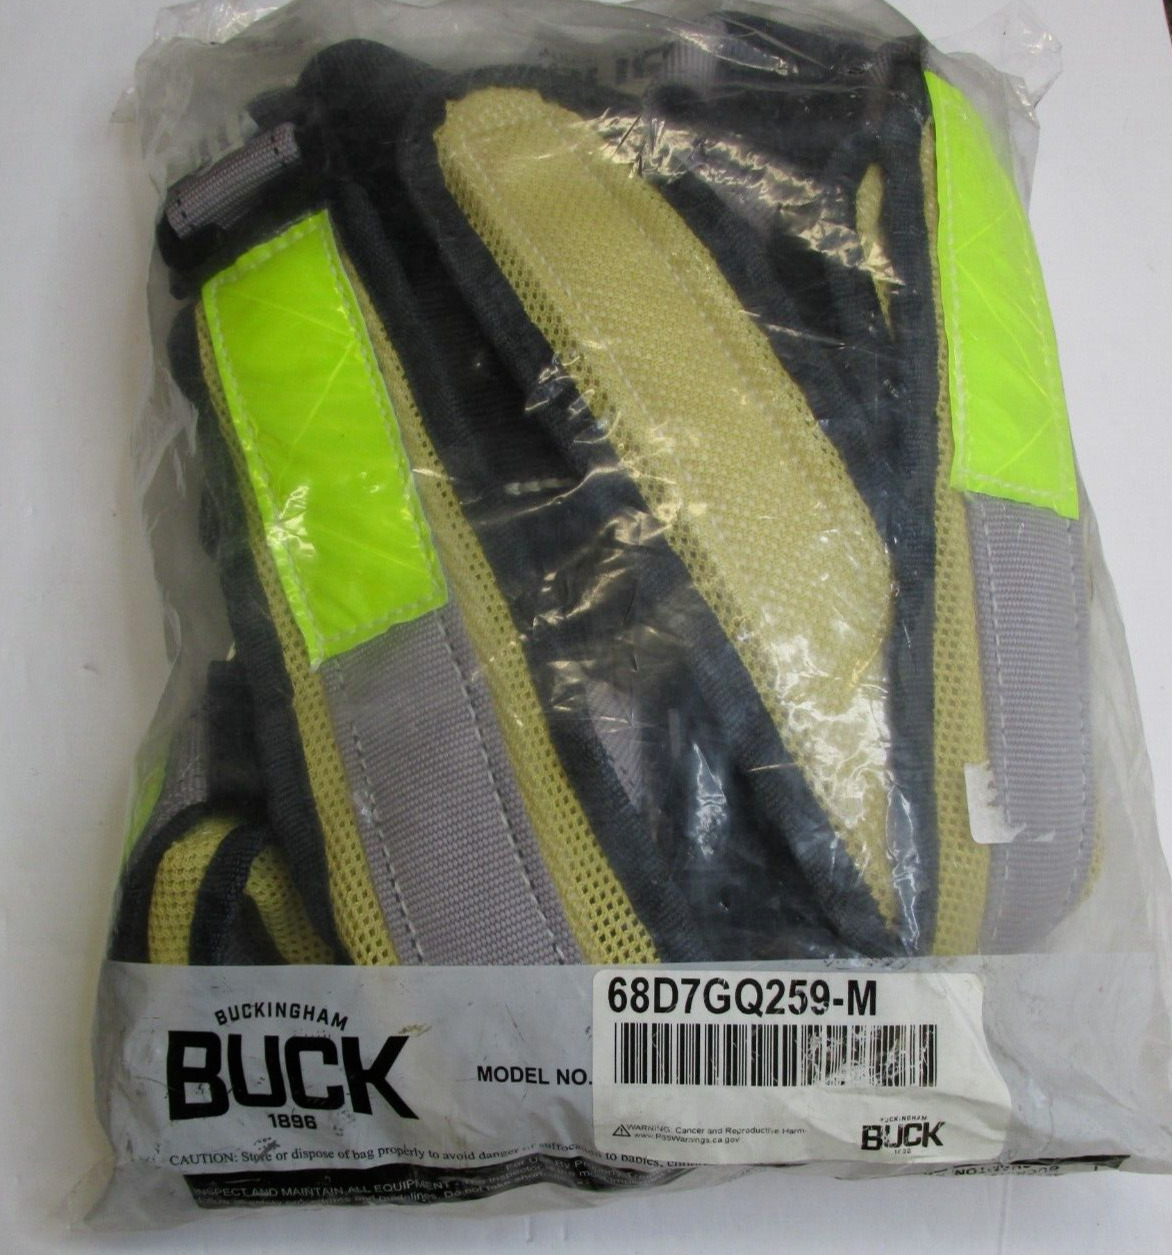 NEW Buckingham Buck 68D7GQ259-M Buckfit Harness Size Medium